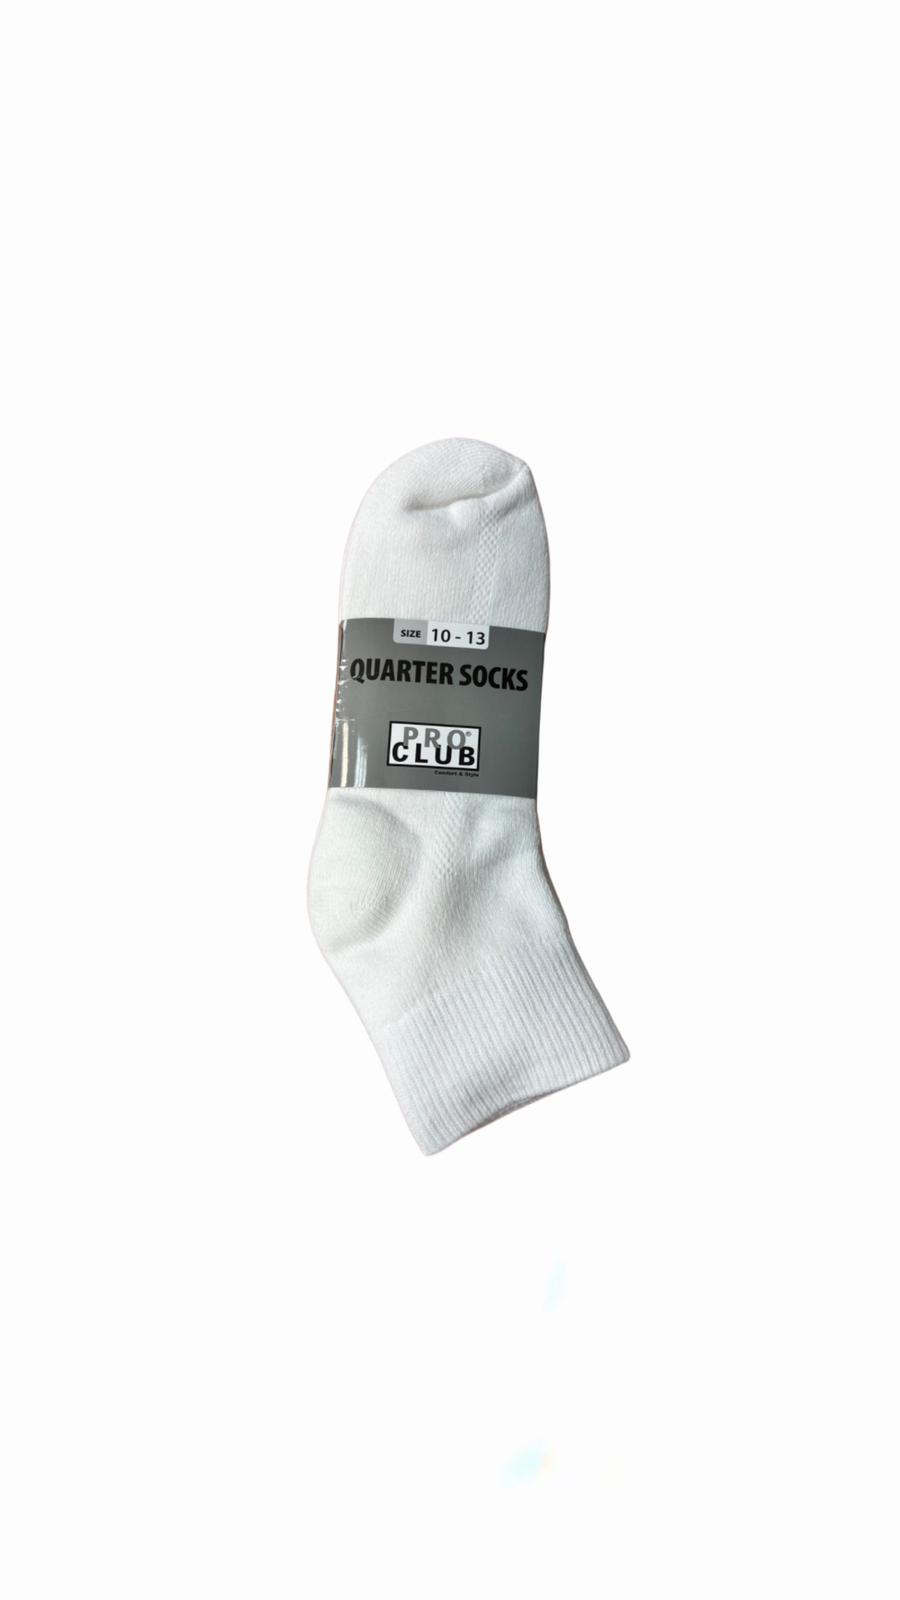 Pro Club Mens 3PC Heavyweight Quarter Socks for Casual Comfort